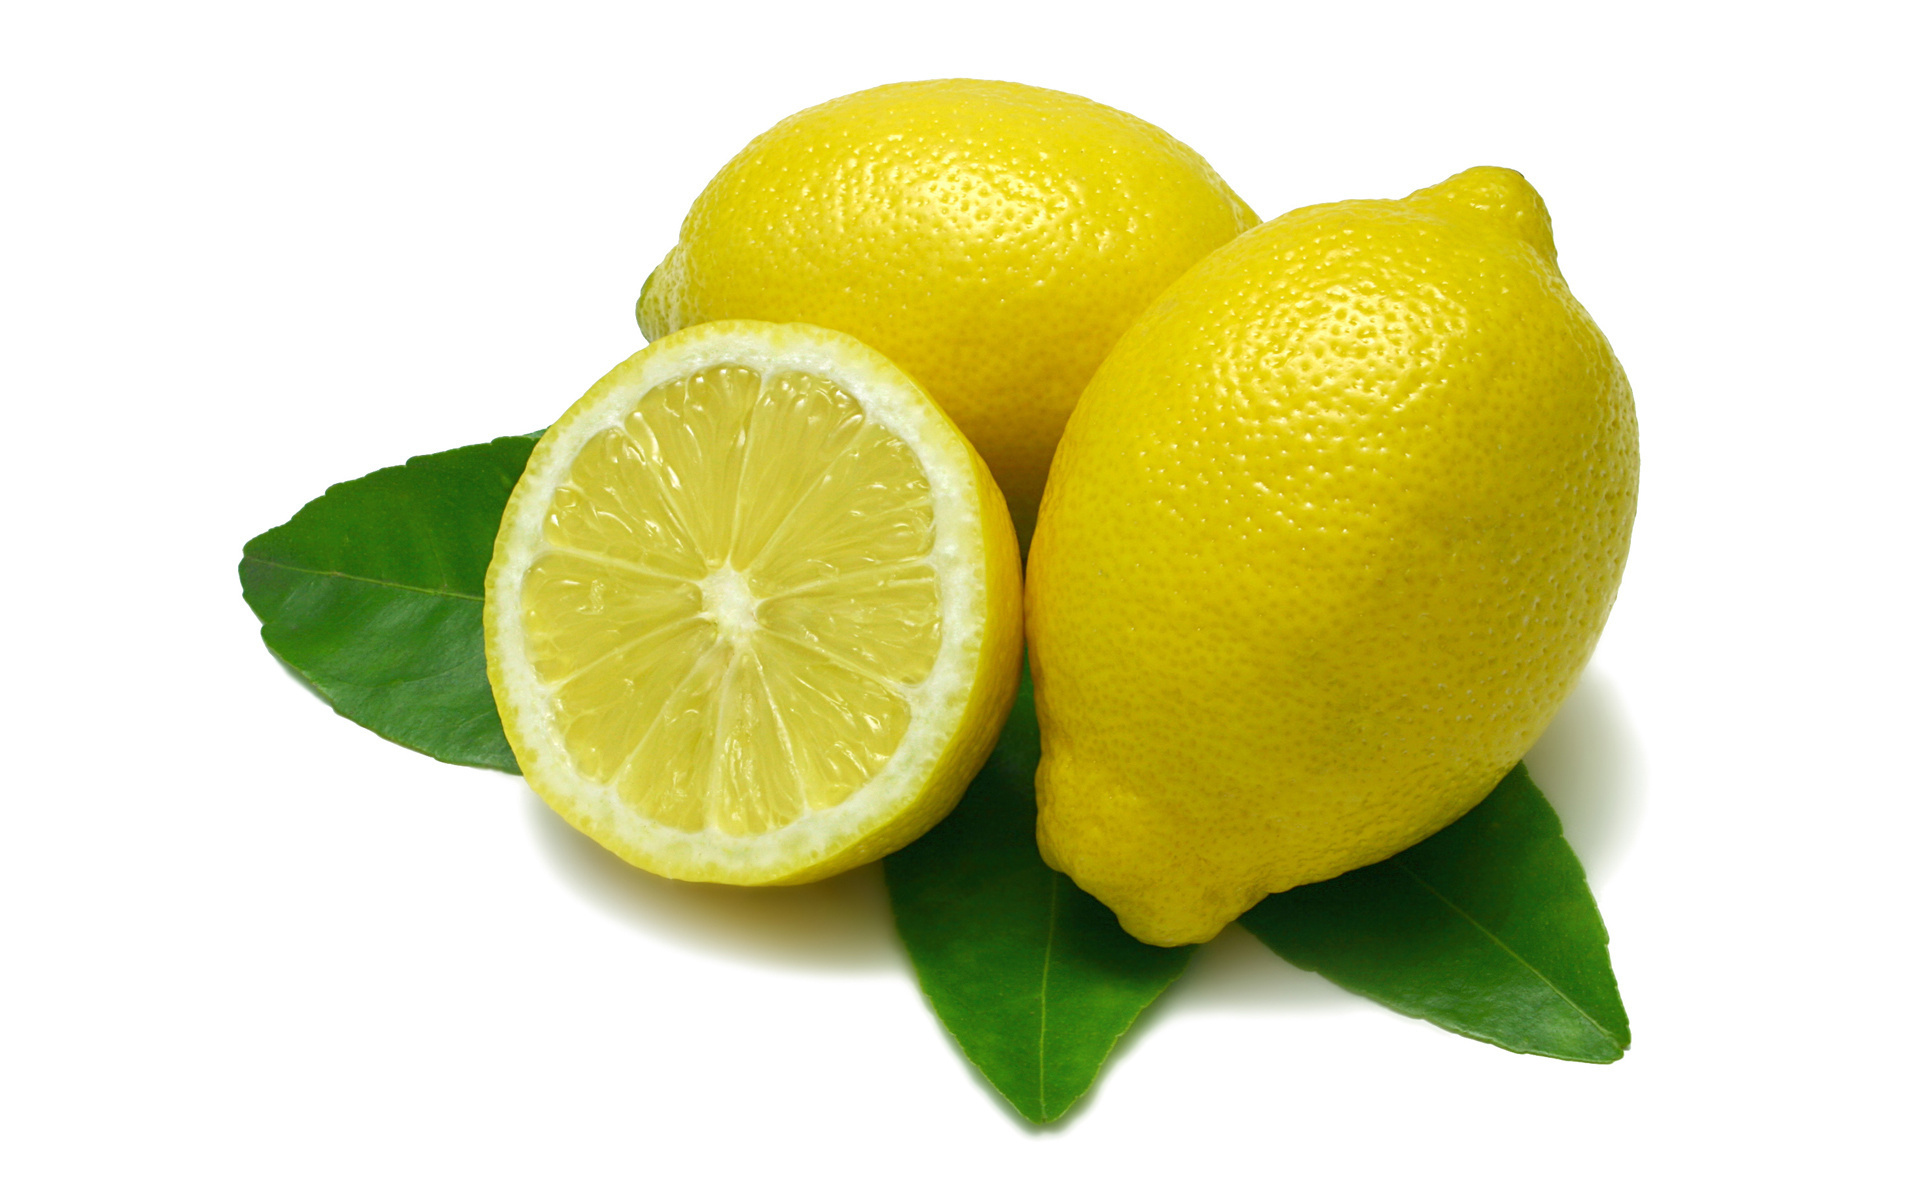 lemon wallpaper hd,persian lime,lime,key lime,lemon,citrus